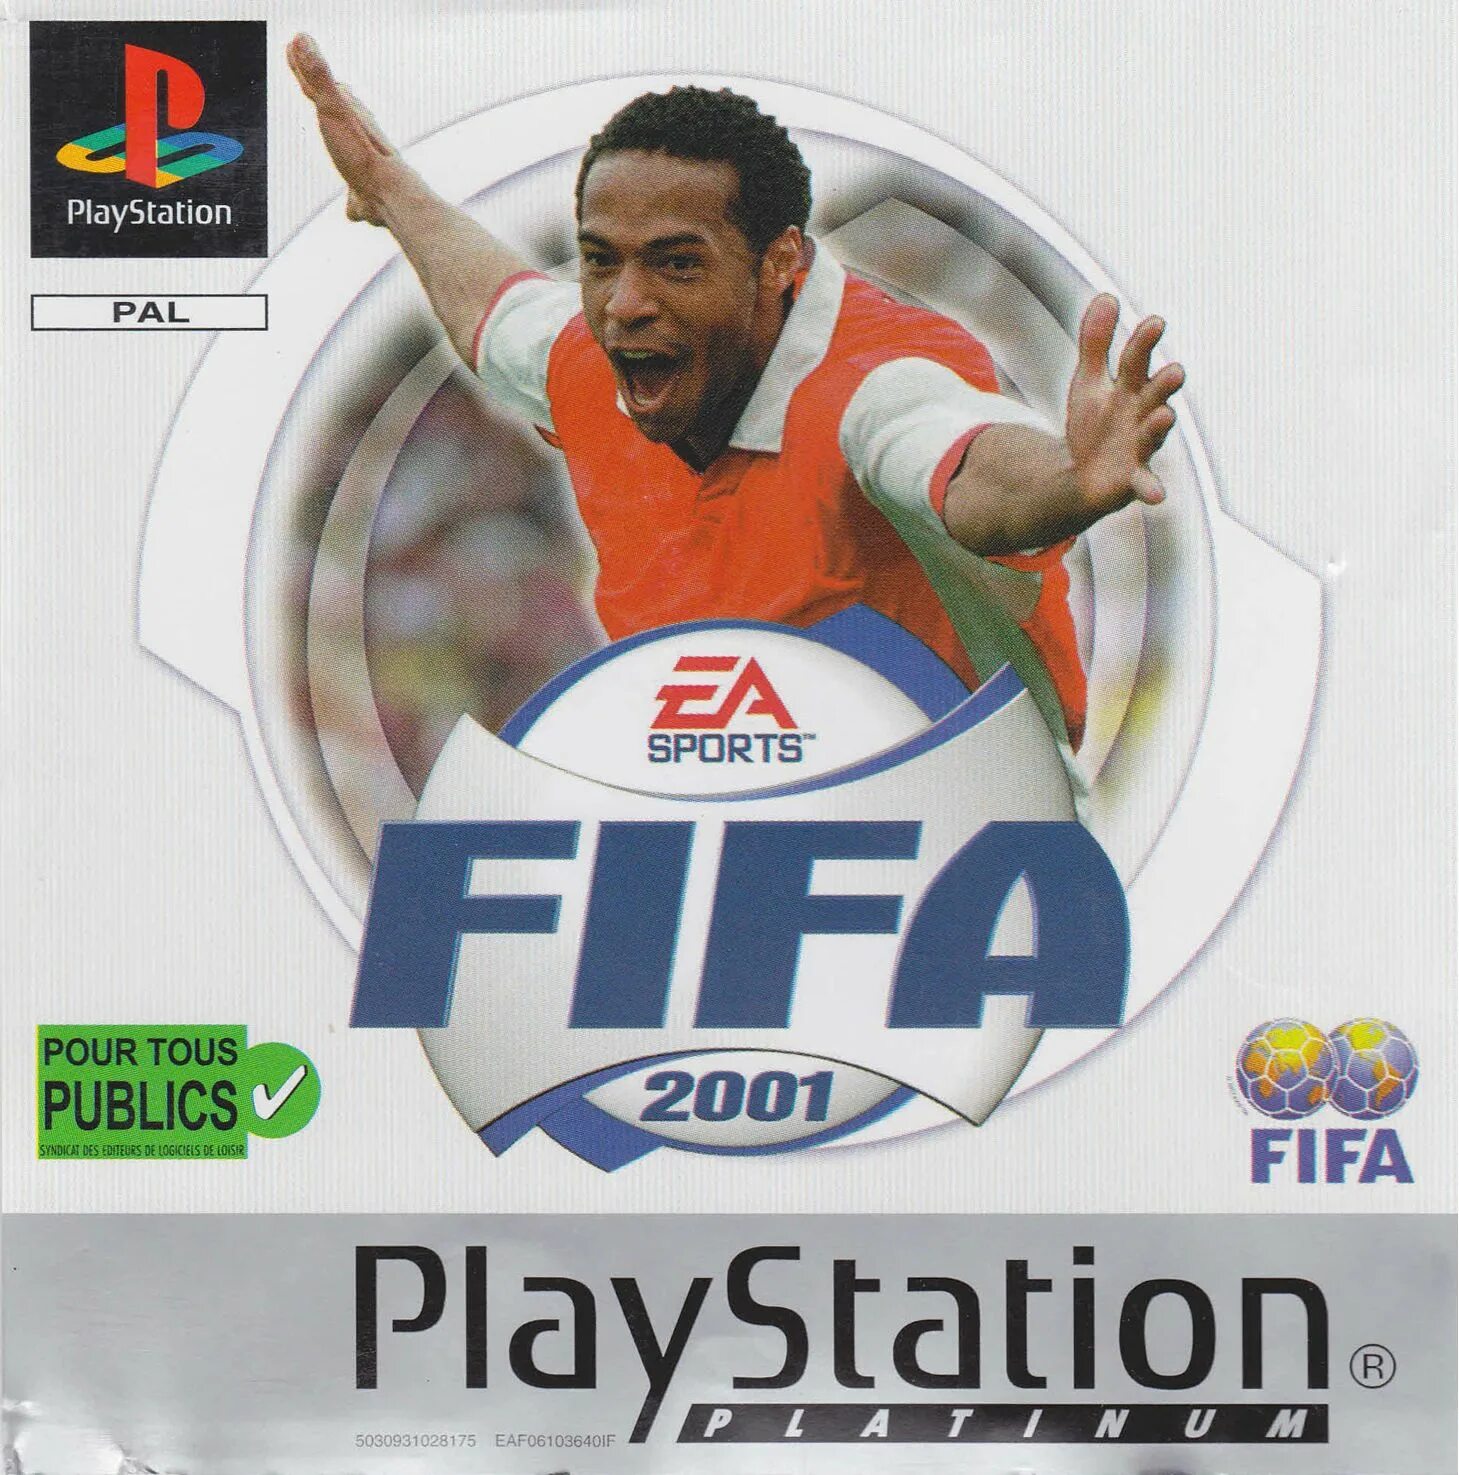 ФИФА на плейстейшен 1. FIFA 2005 ps1 обложка. FIFA 2001 ps1 Disc. FIFA 2001 диск PC.